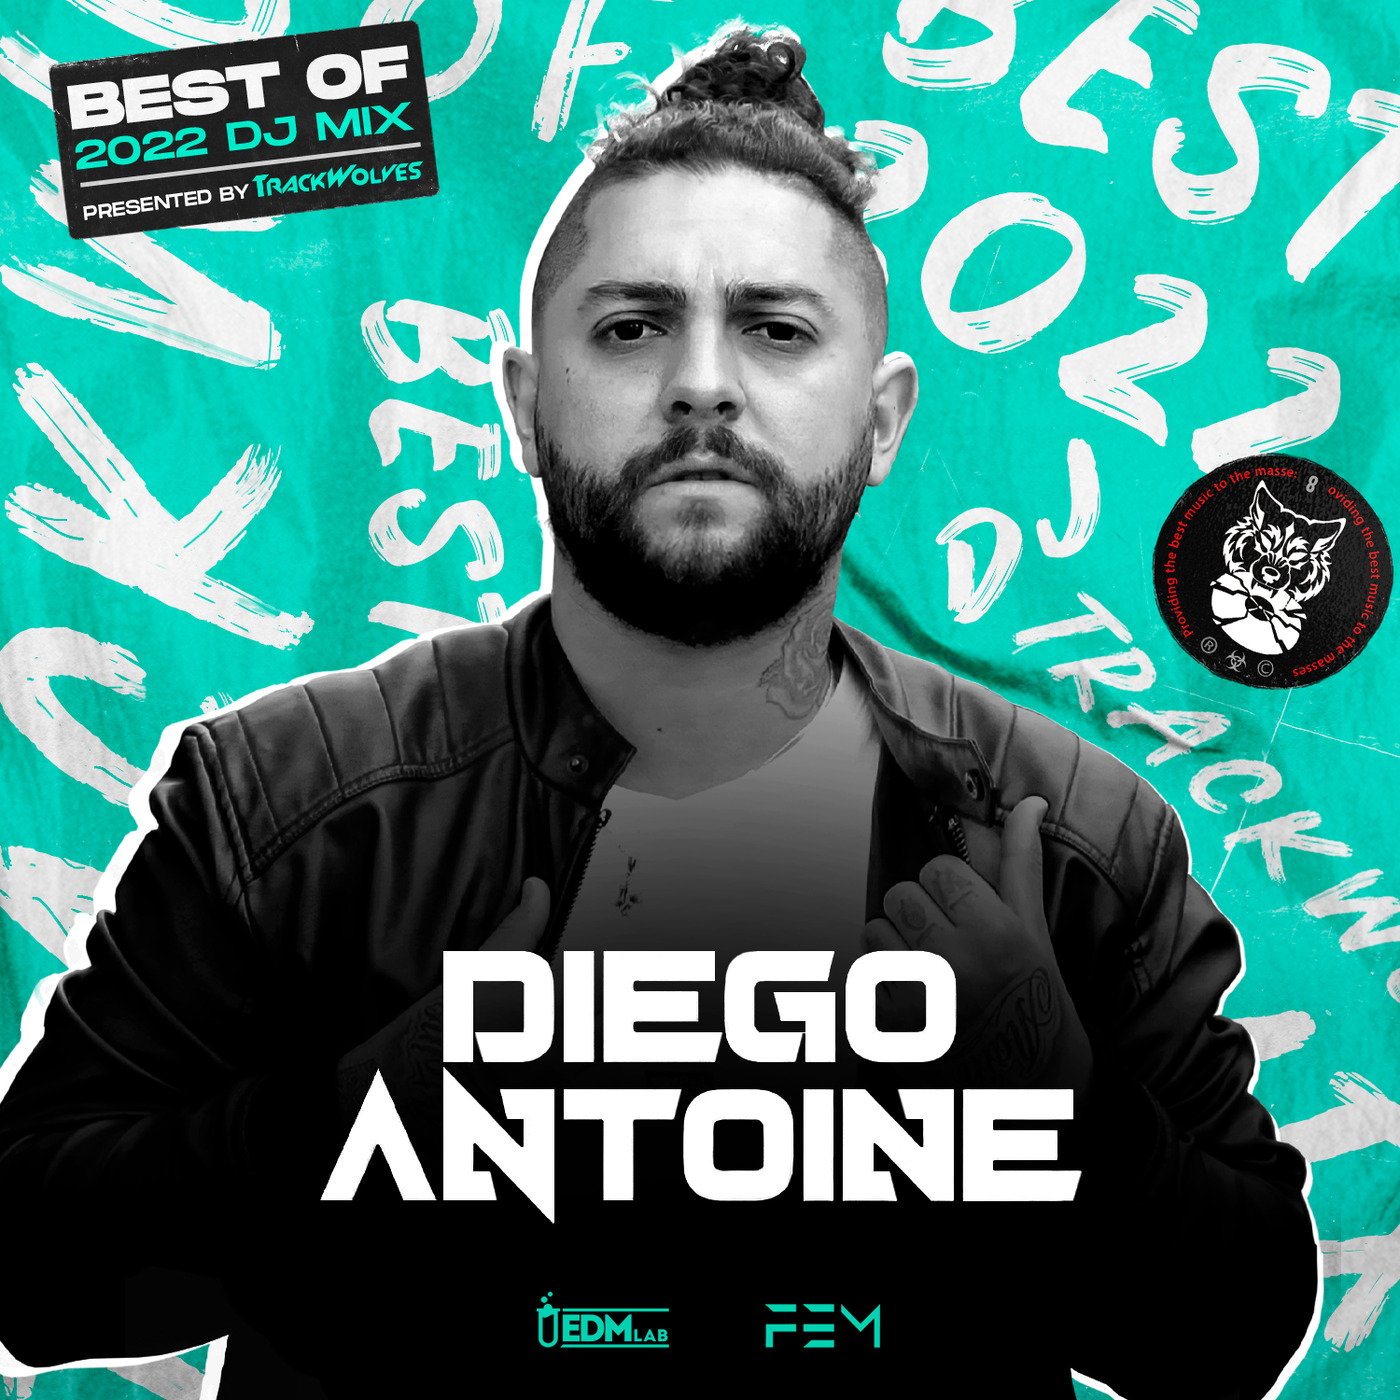 Diego Antoine TrackWolves Best Of 2022 DJ Mix